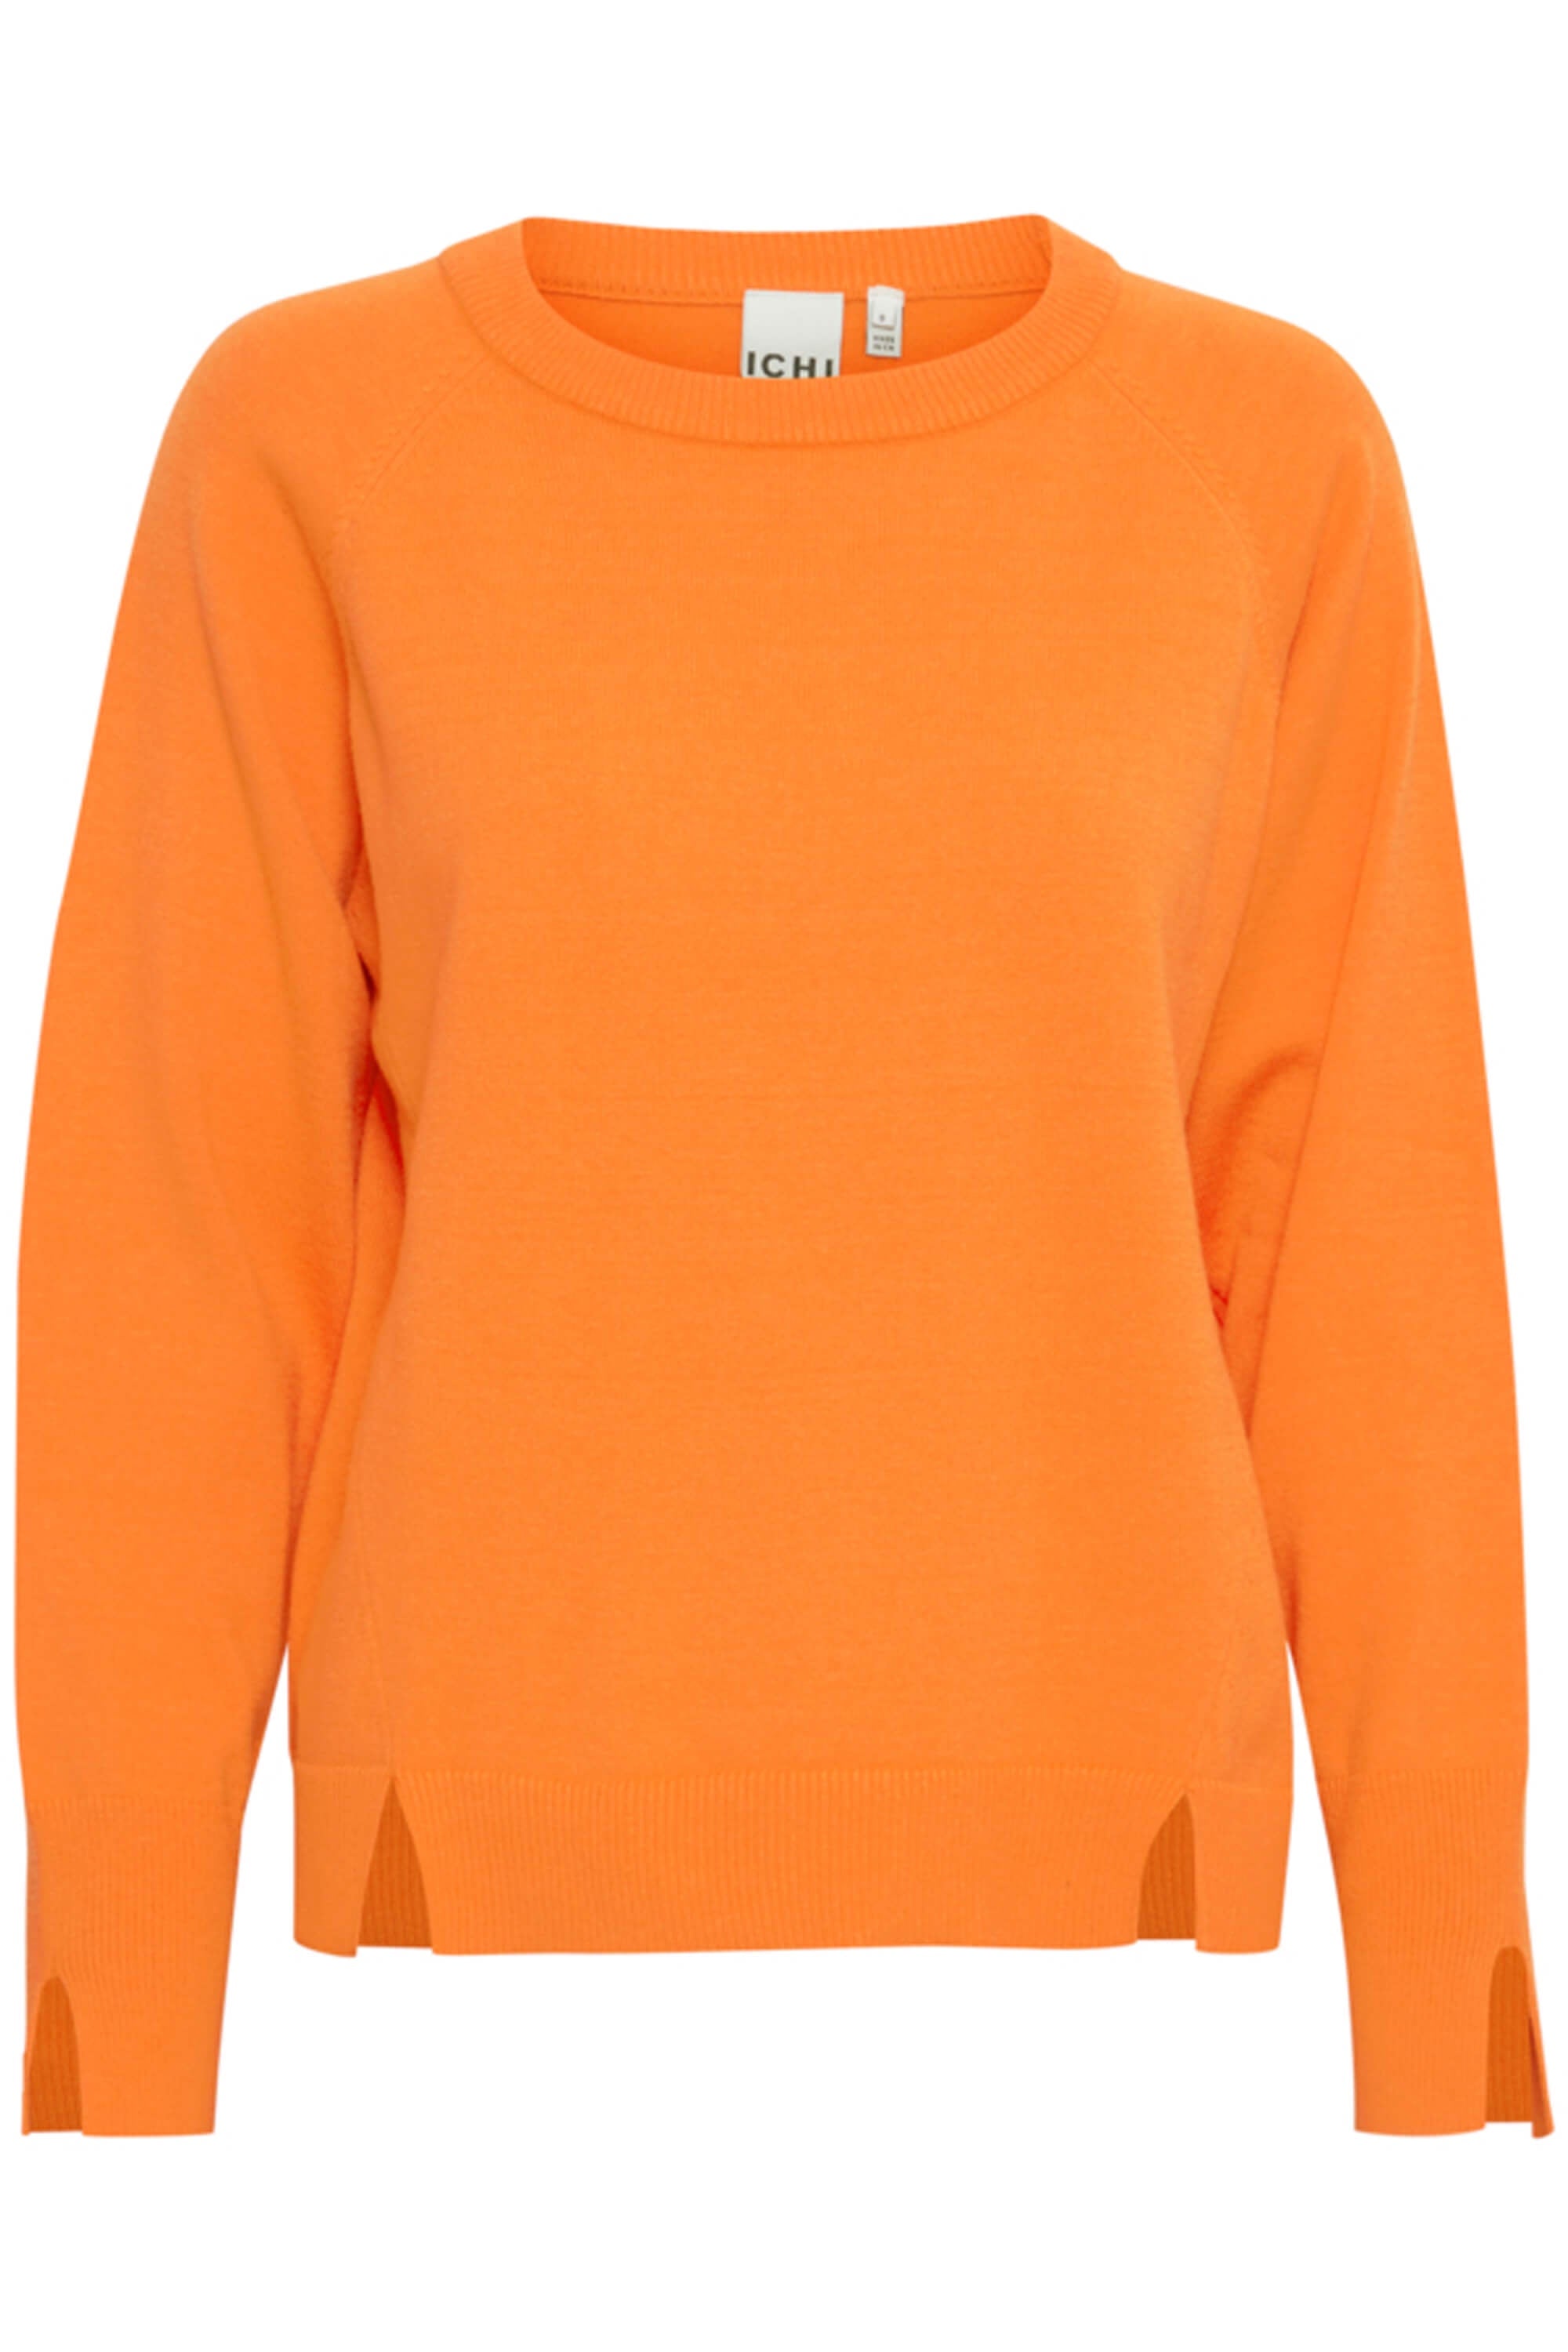 Ichi Boston Knit Pullover Orange